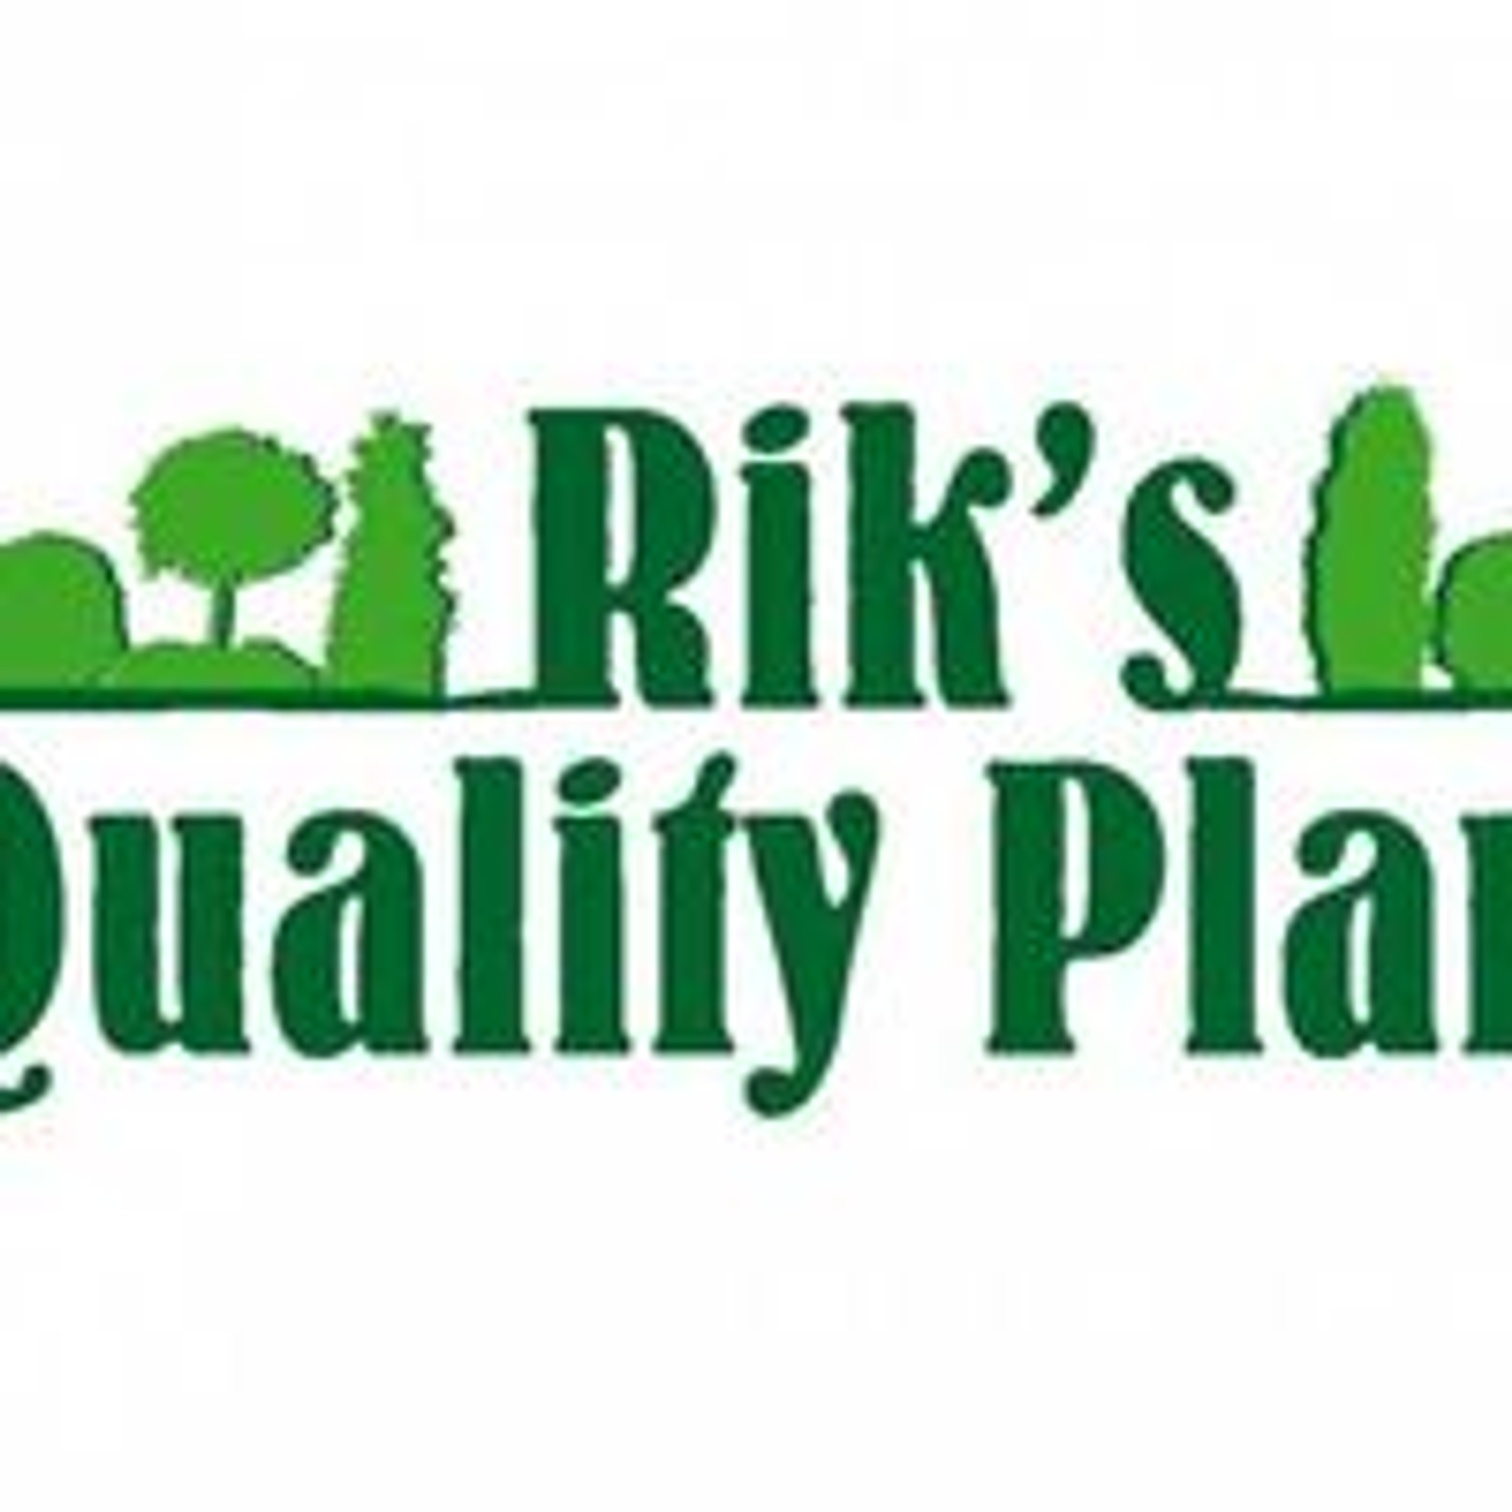 Rik's Quality Plants logo